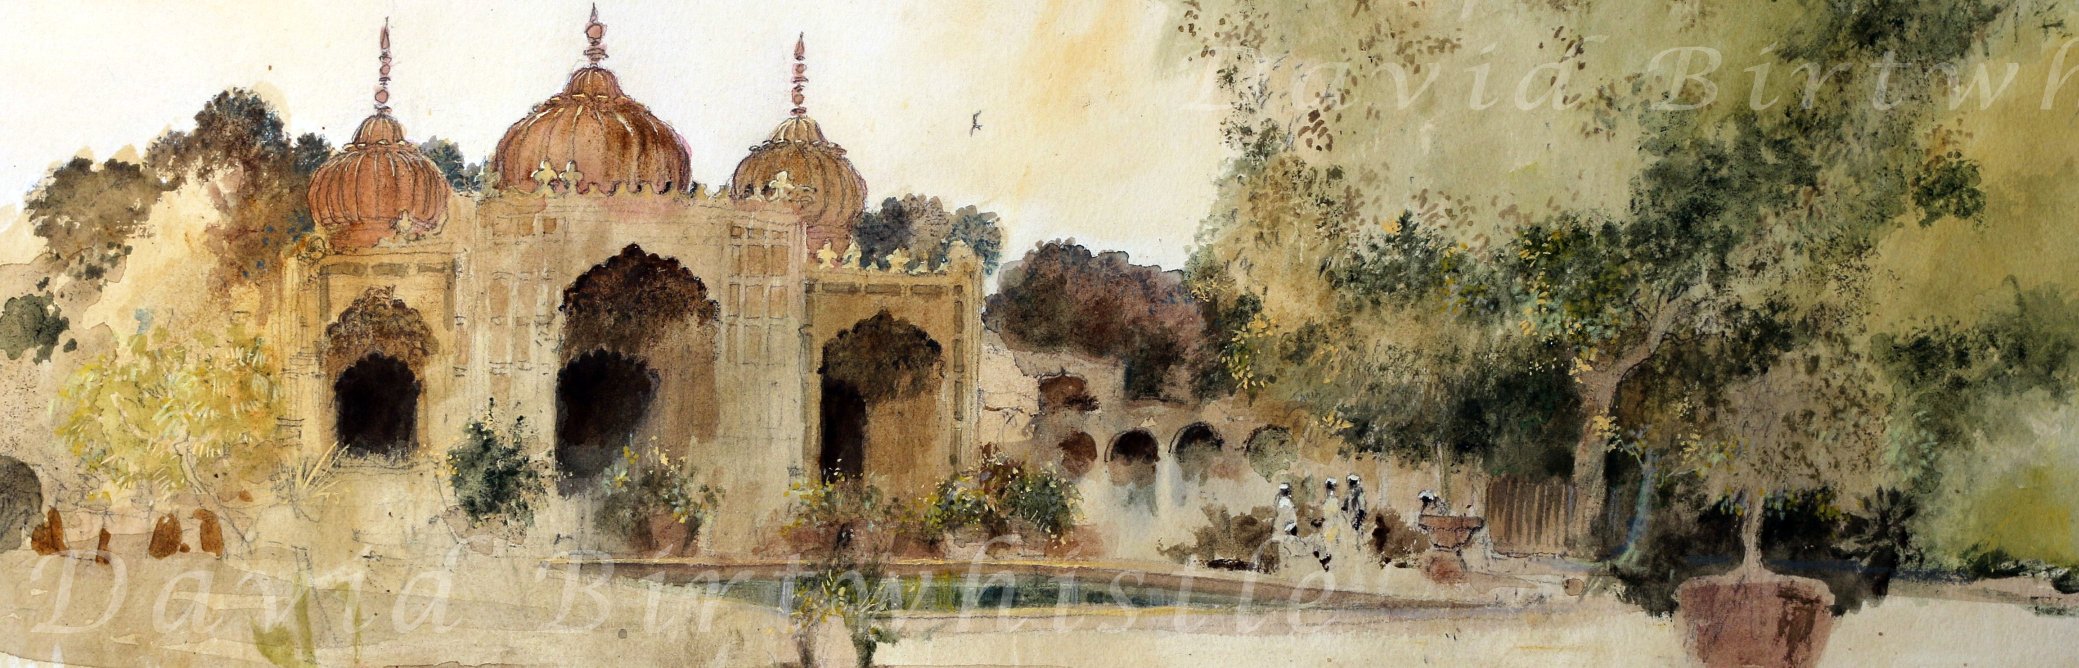 Qudsia Bagh, Old Delhi